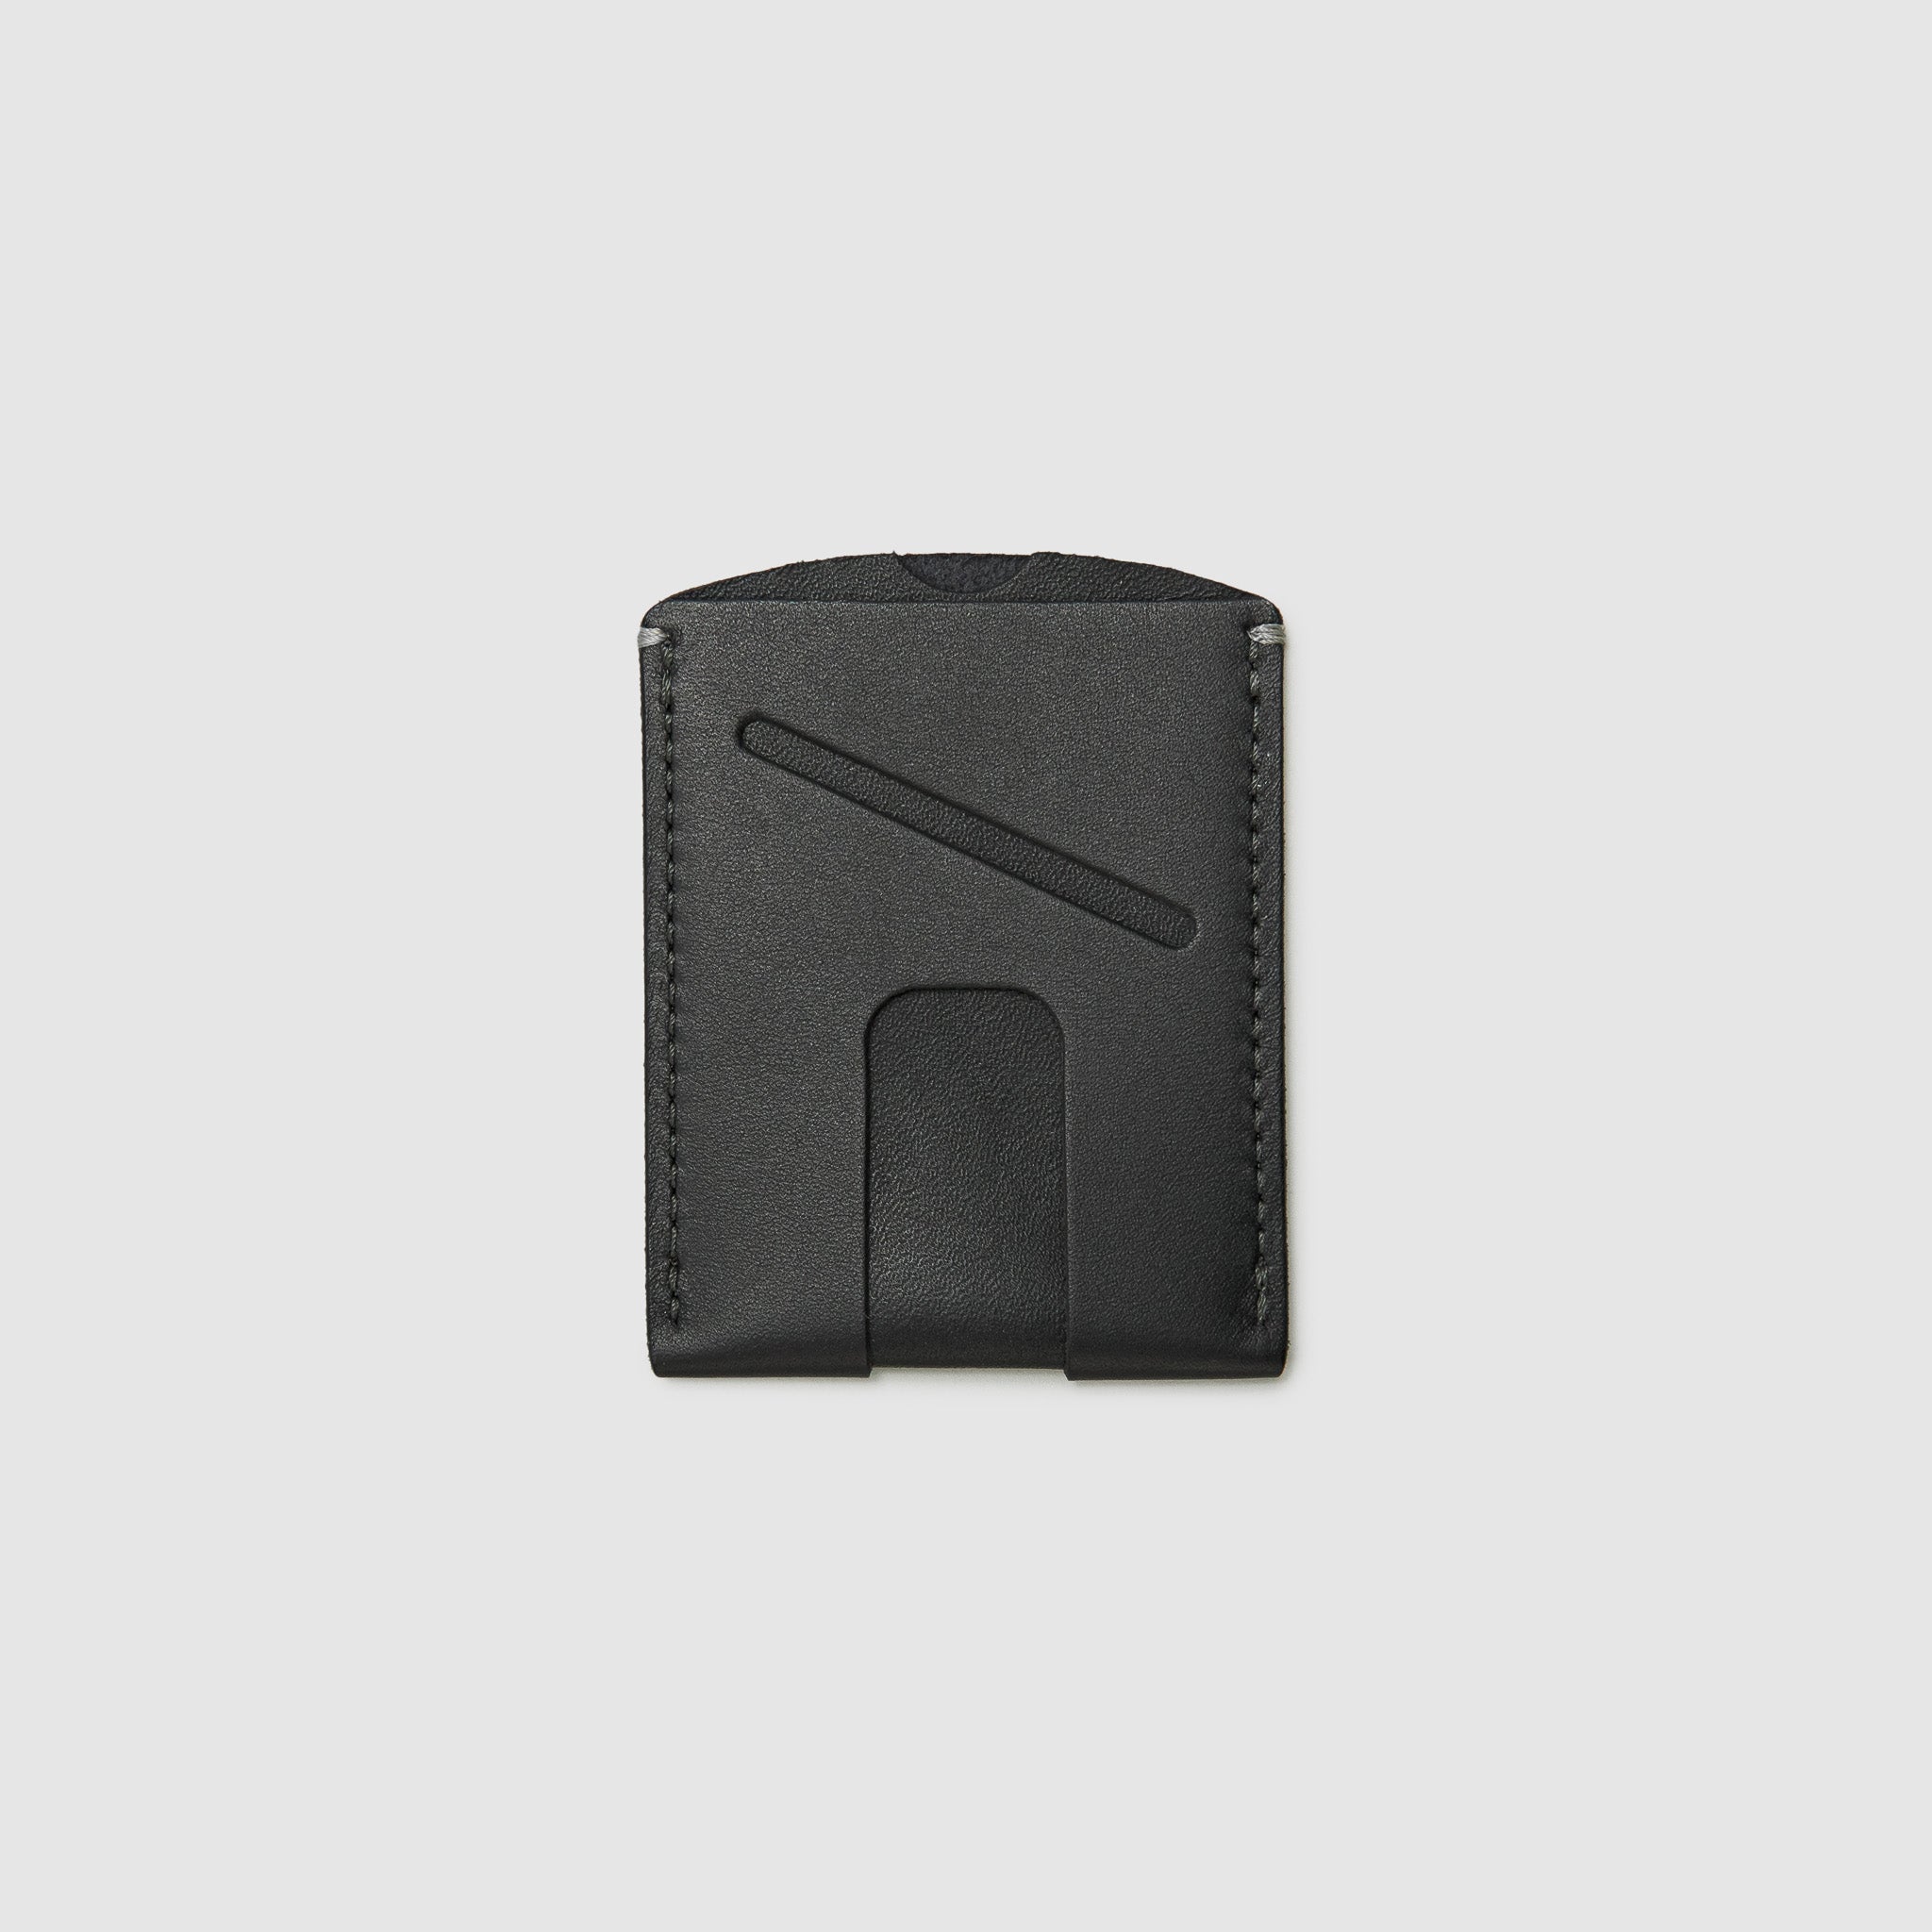  iN. Slim credit card holder wallet, Gift card display